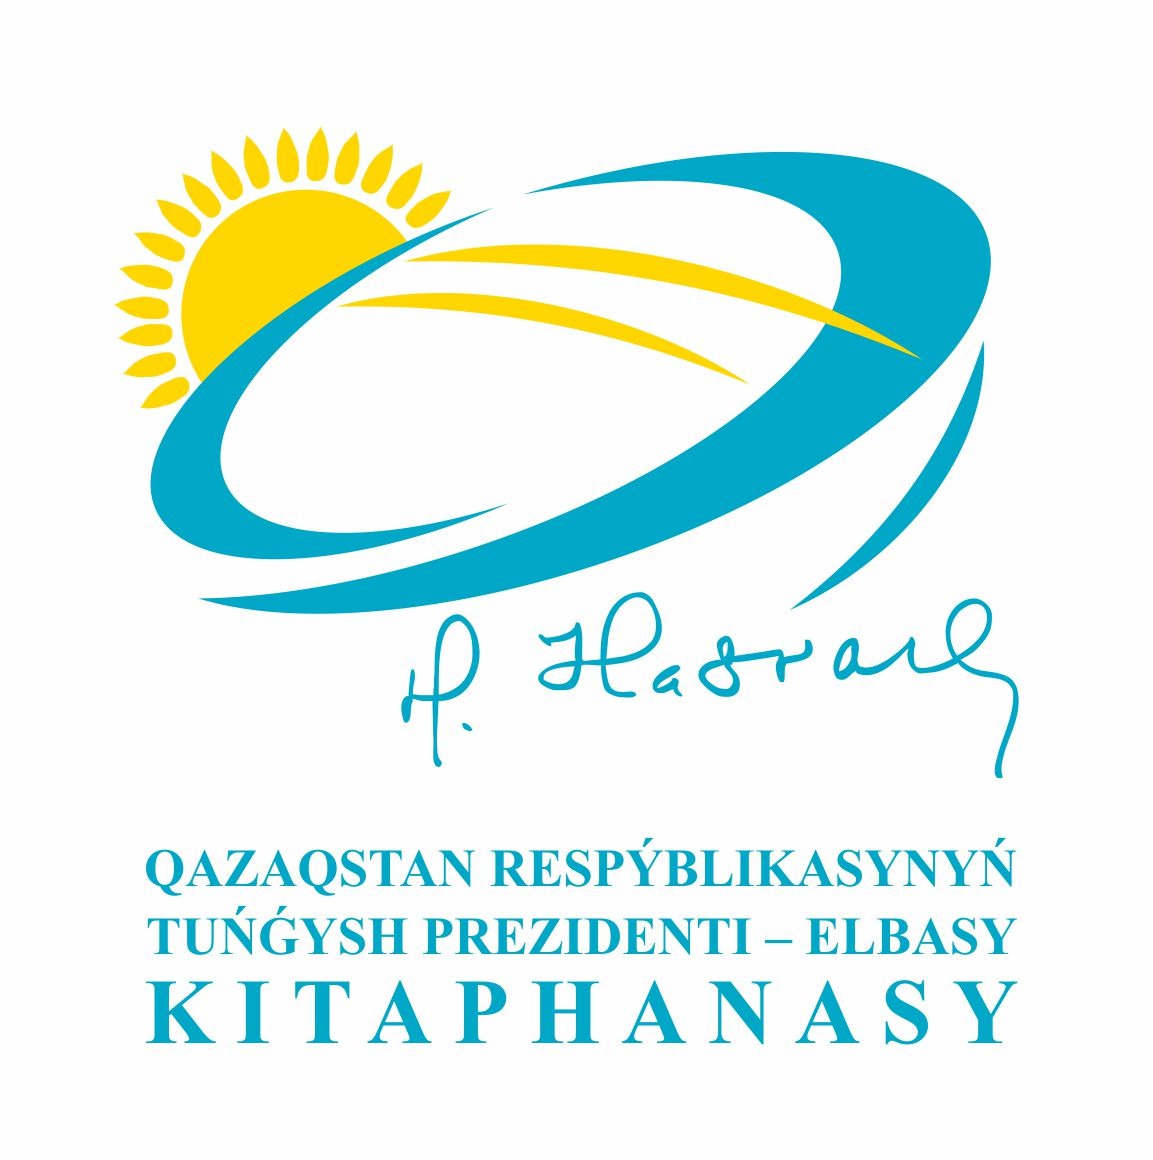 Qazaqstan Respyblikasynyn Tungysh Prezidenti - Elbasy Kitaphanasy